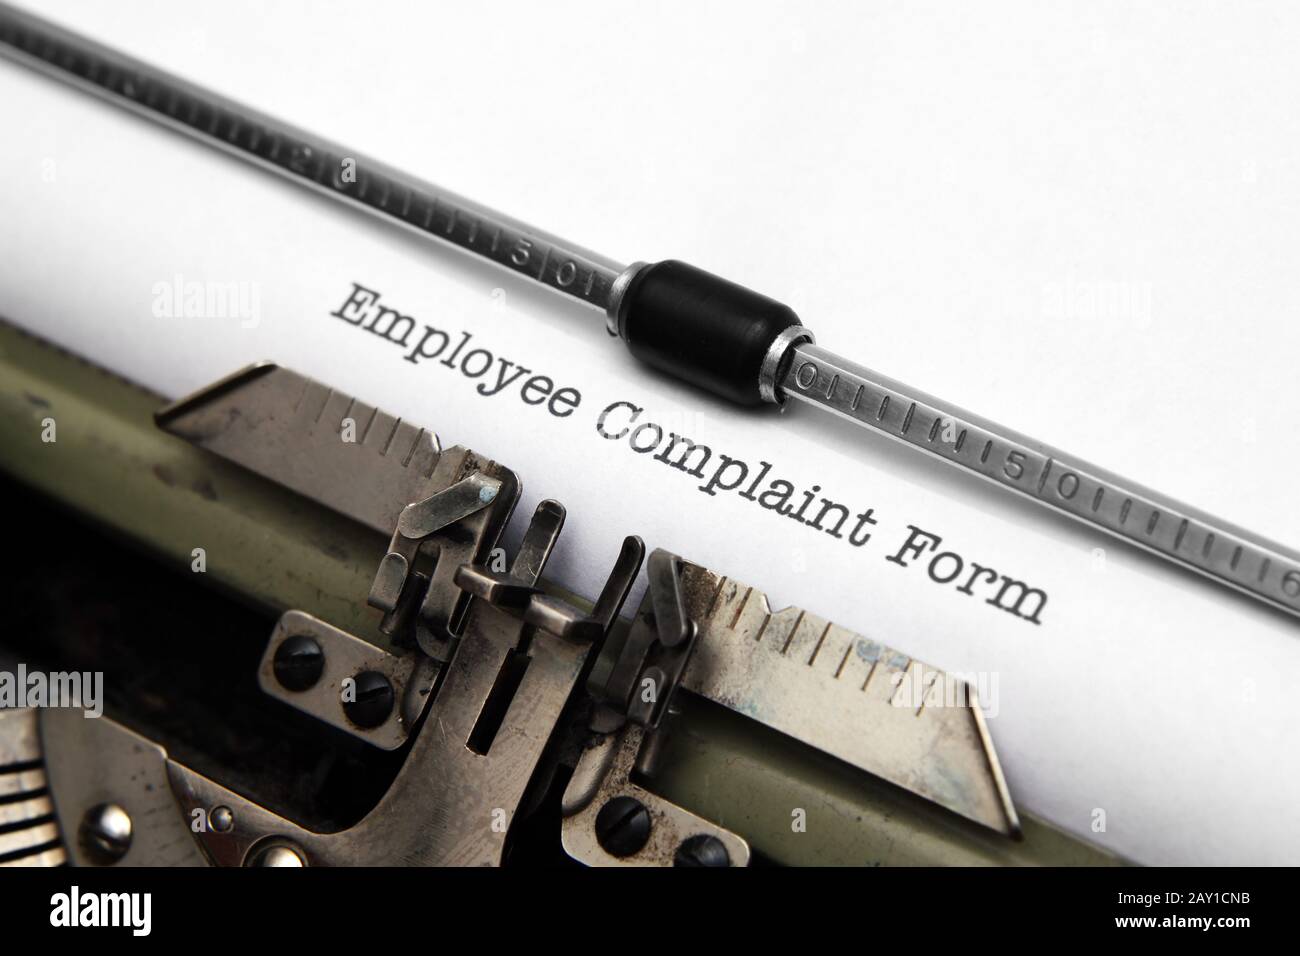 Employee complaint form Stock Photo